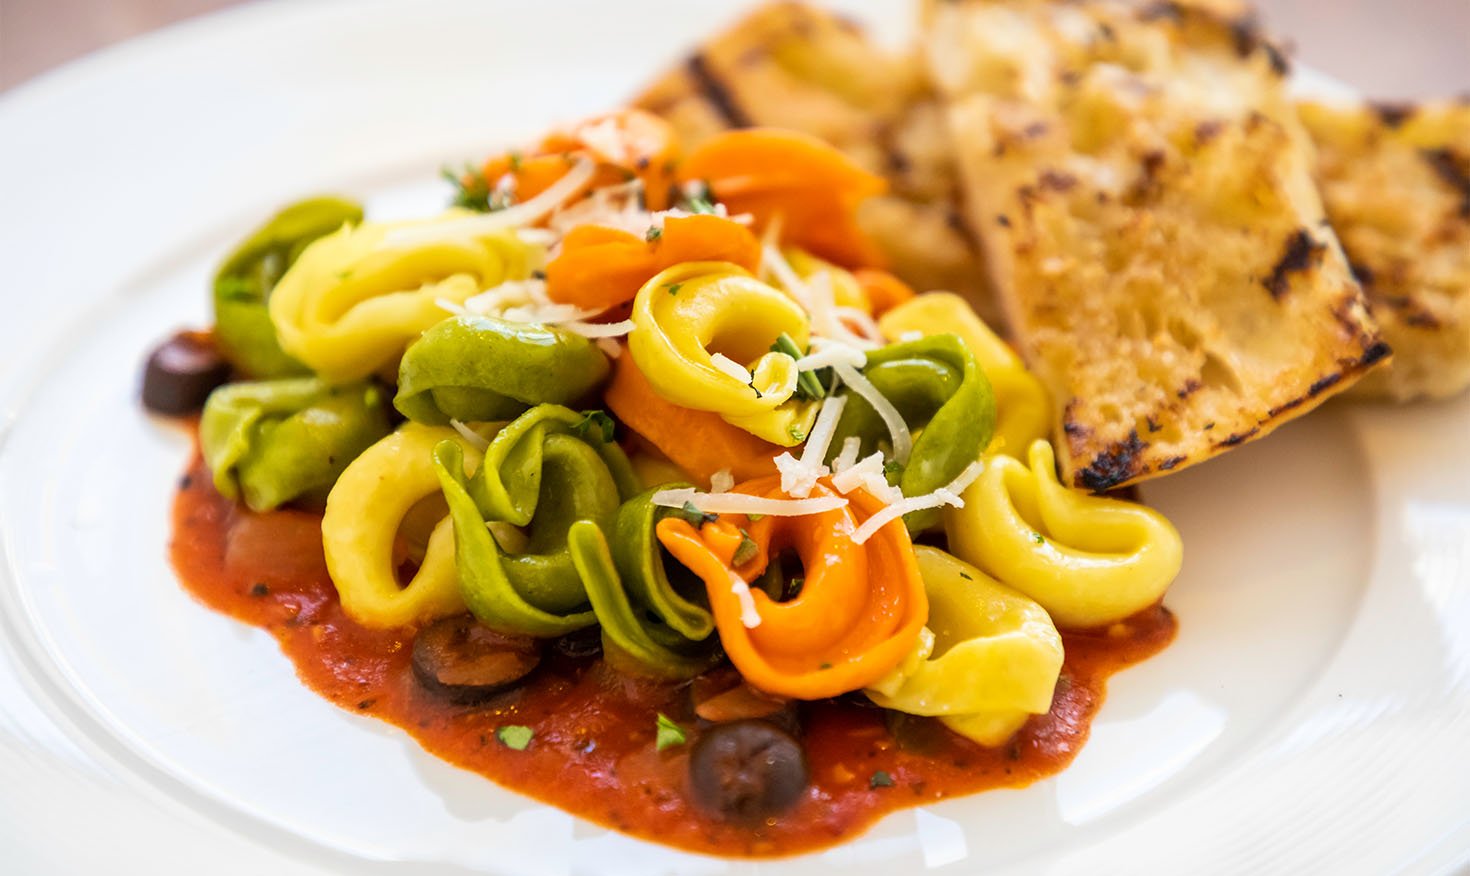 Close-up of a pasta dish